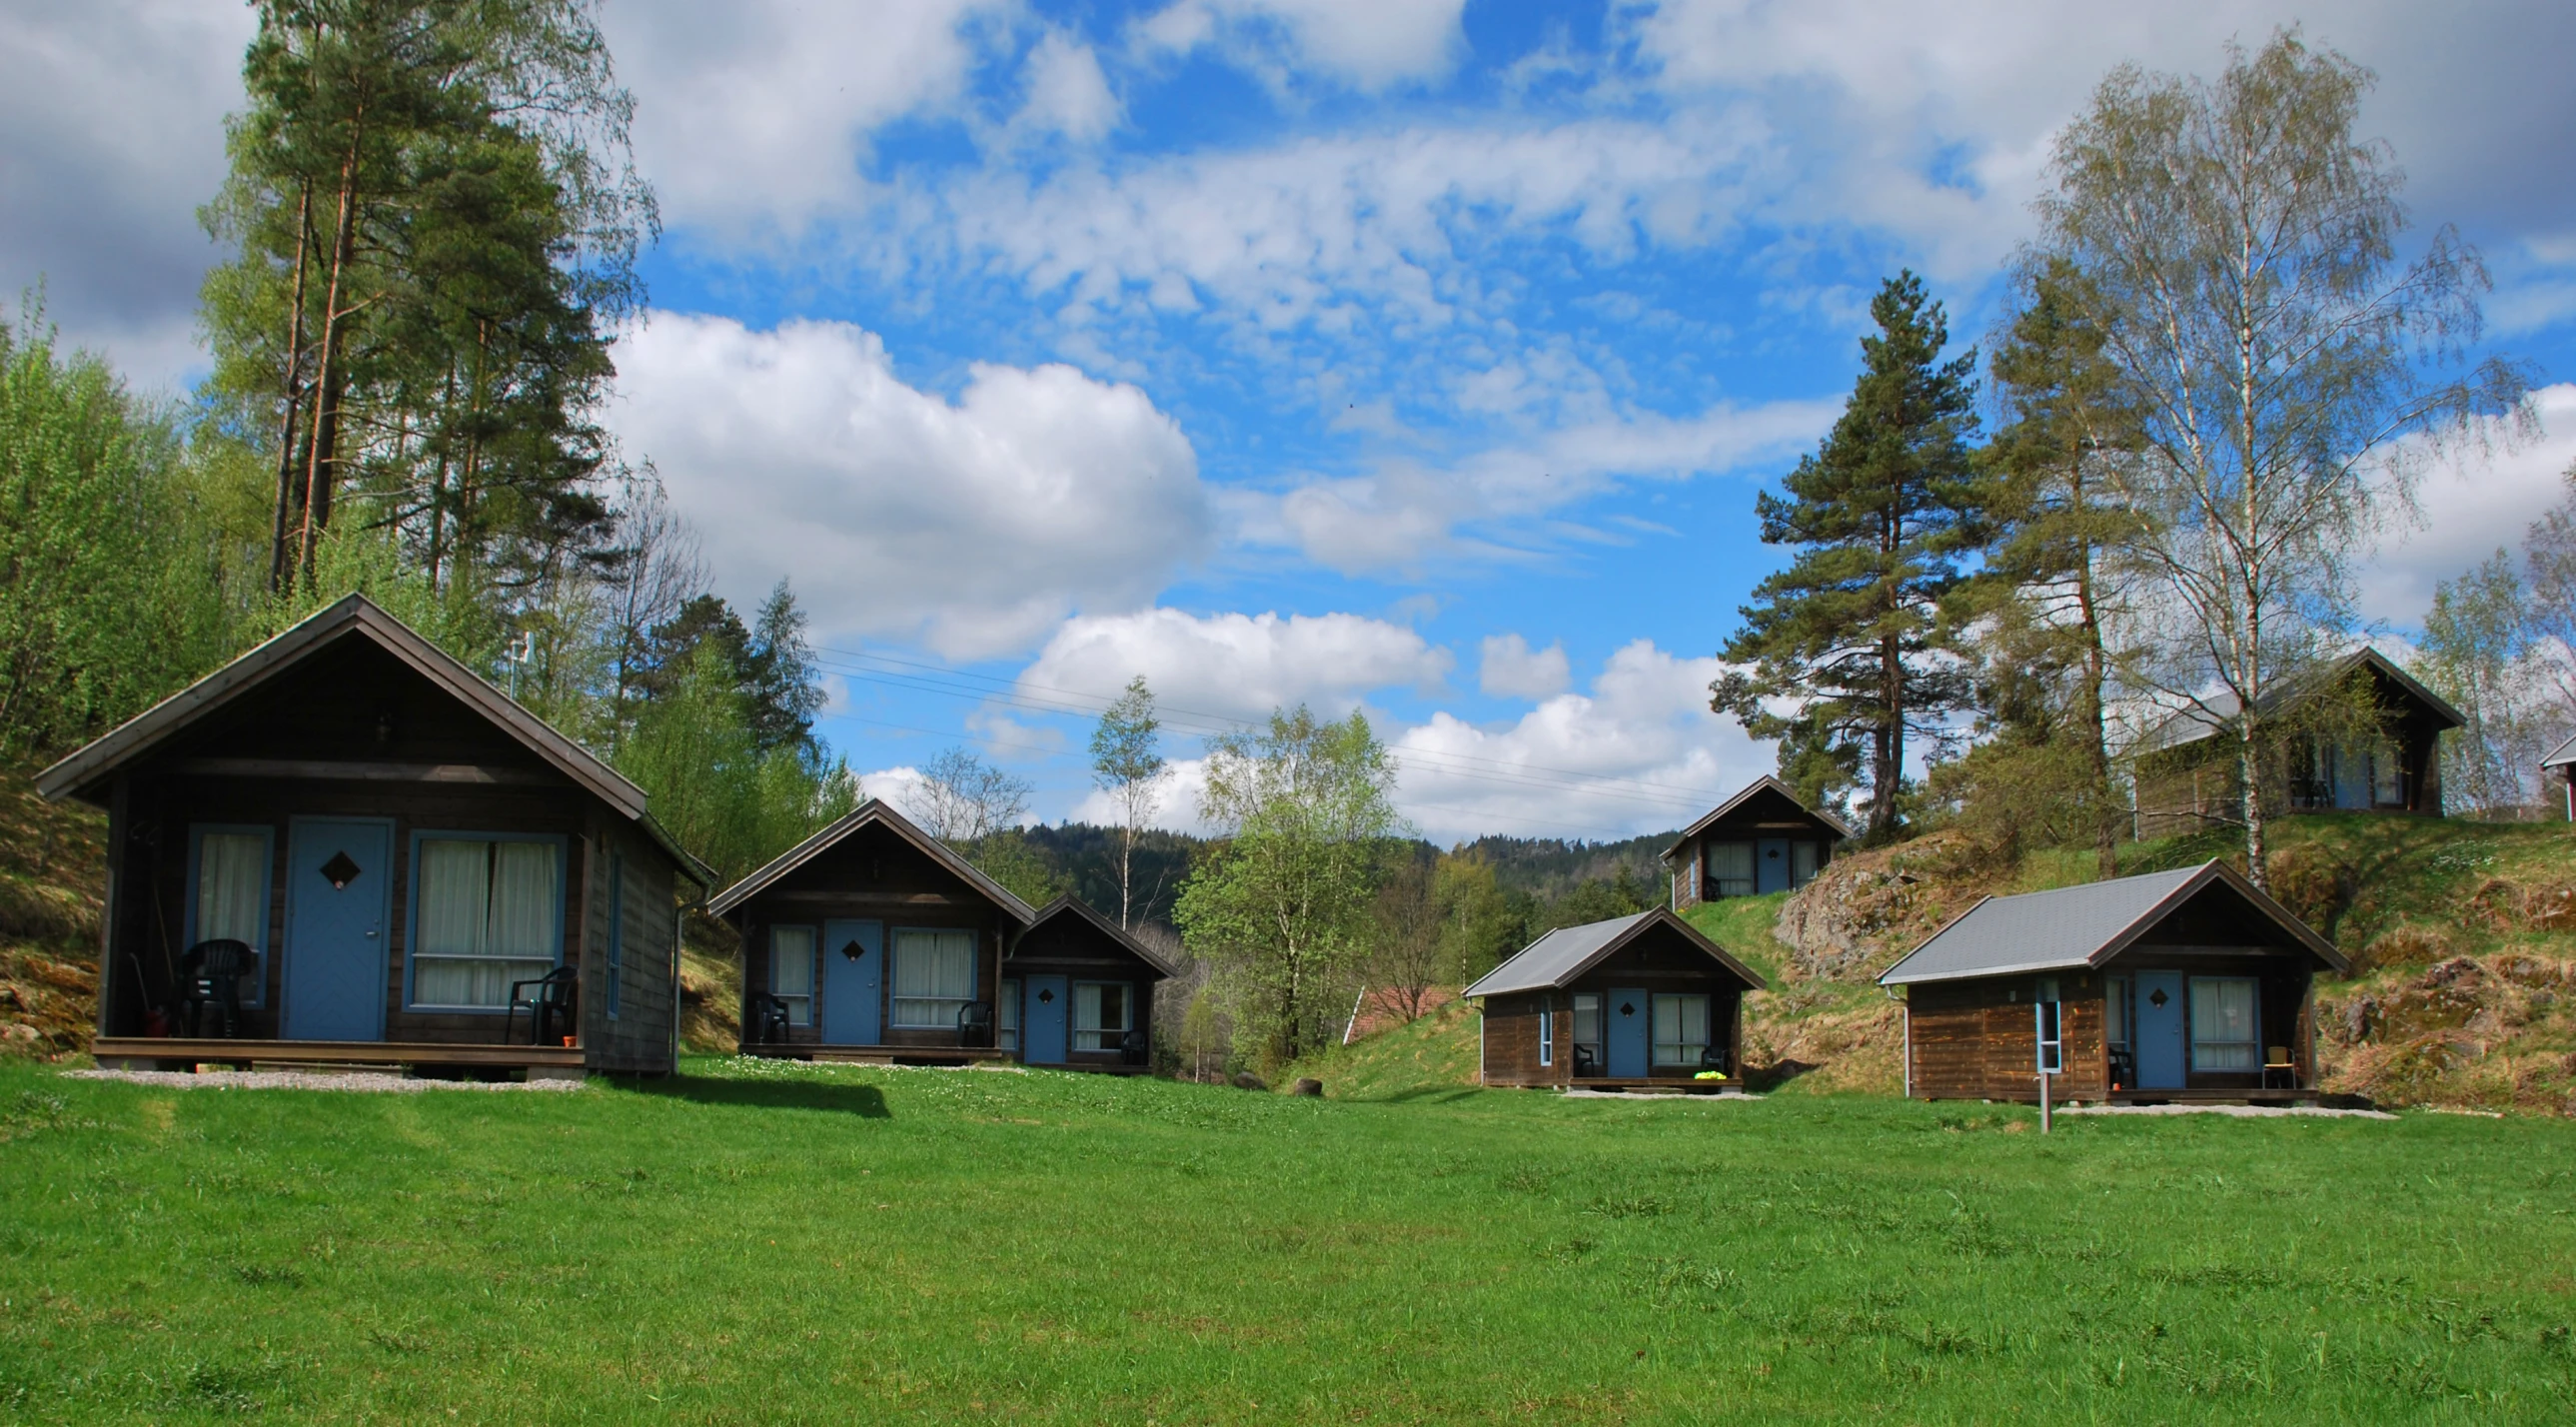 small wooden cabin type buildings in a green field